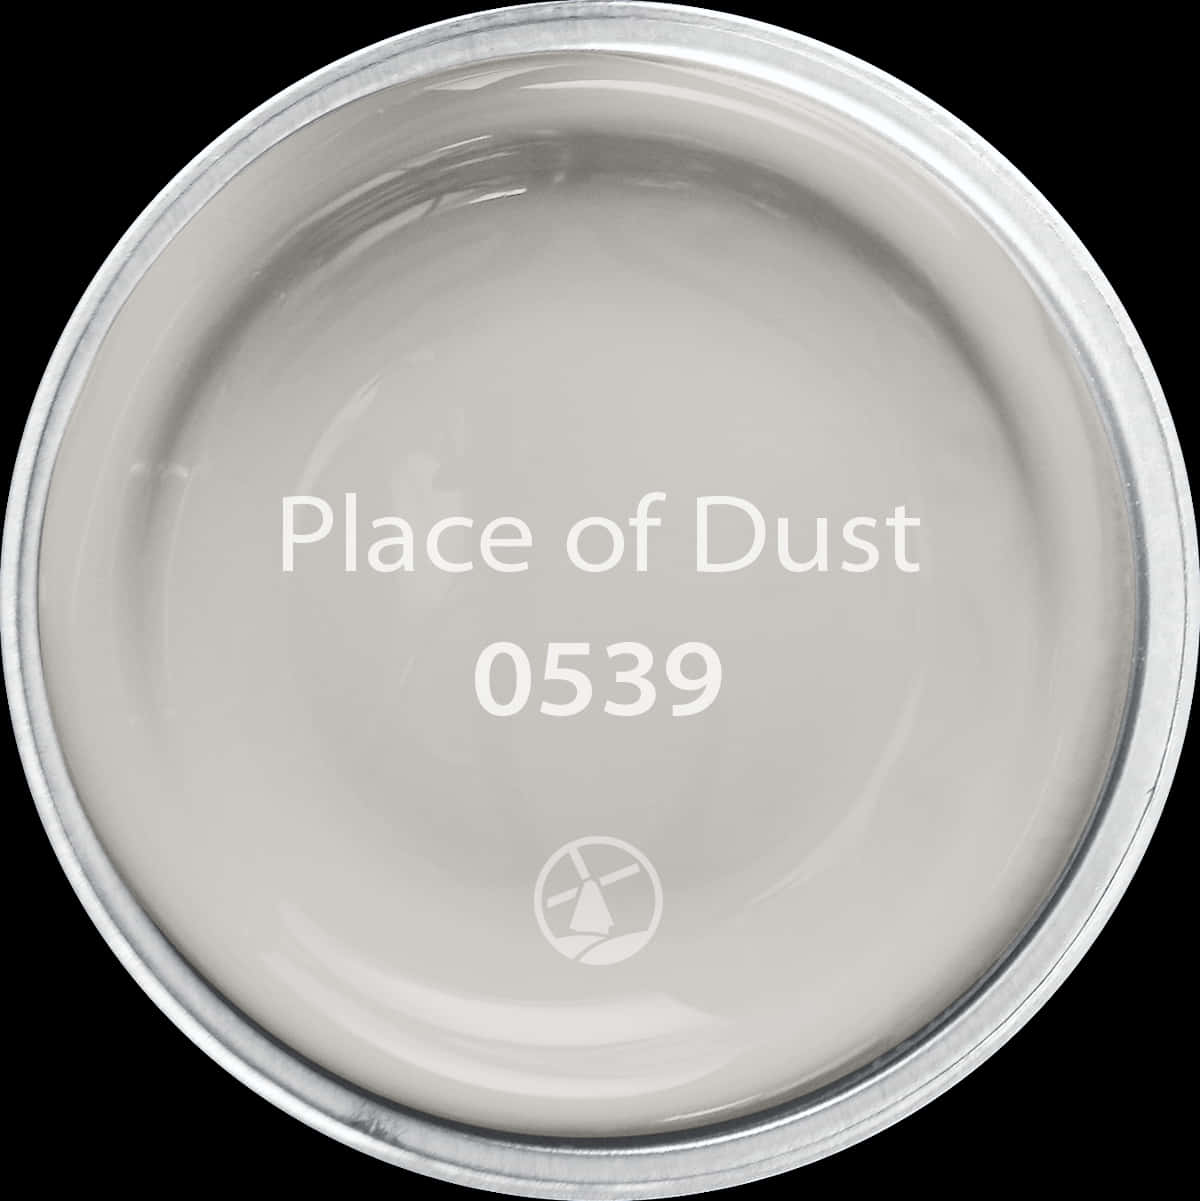 Placeof Dust0539 PNG